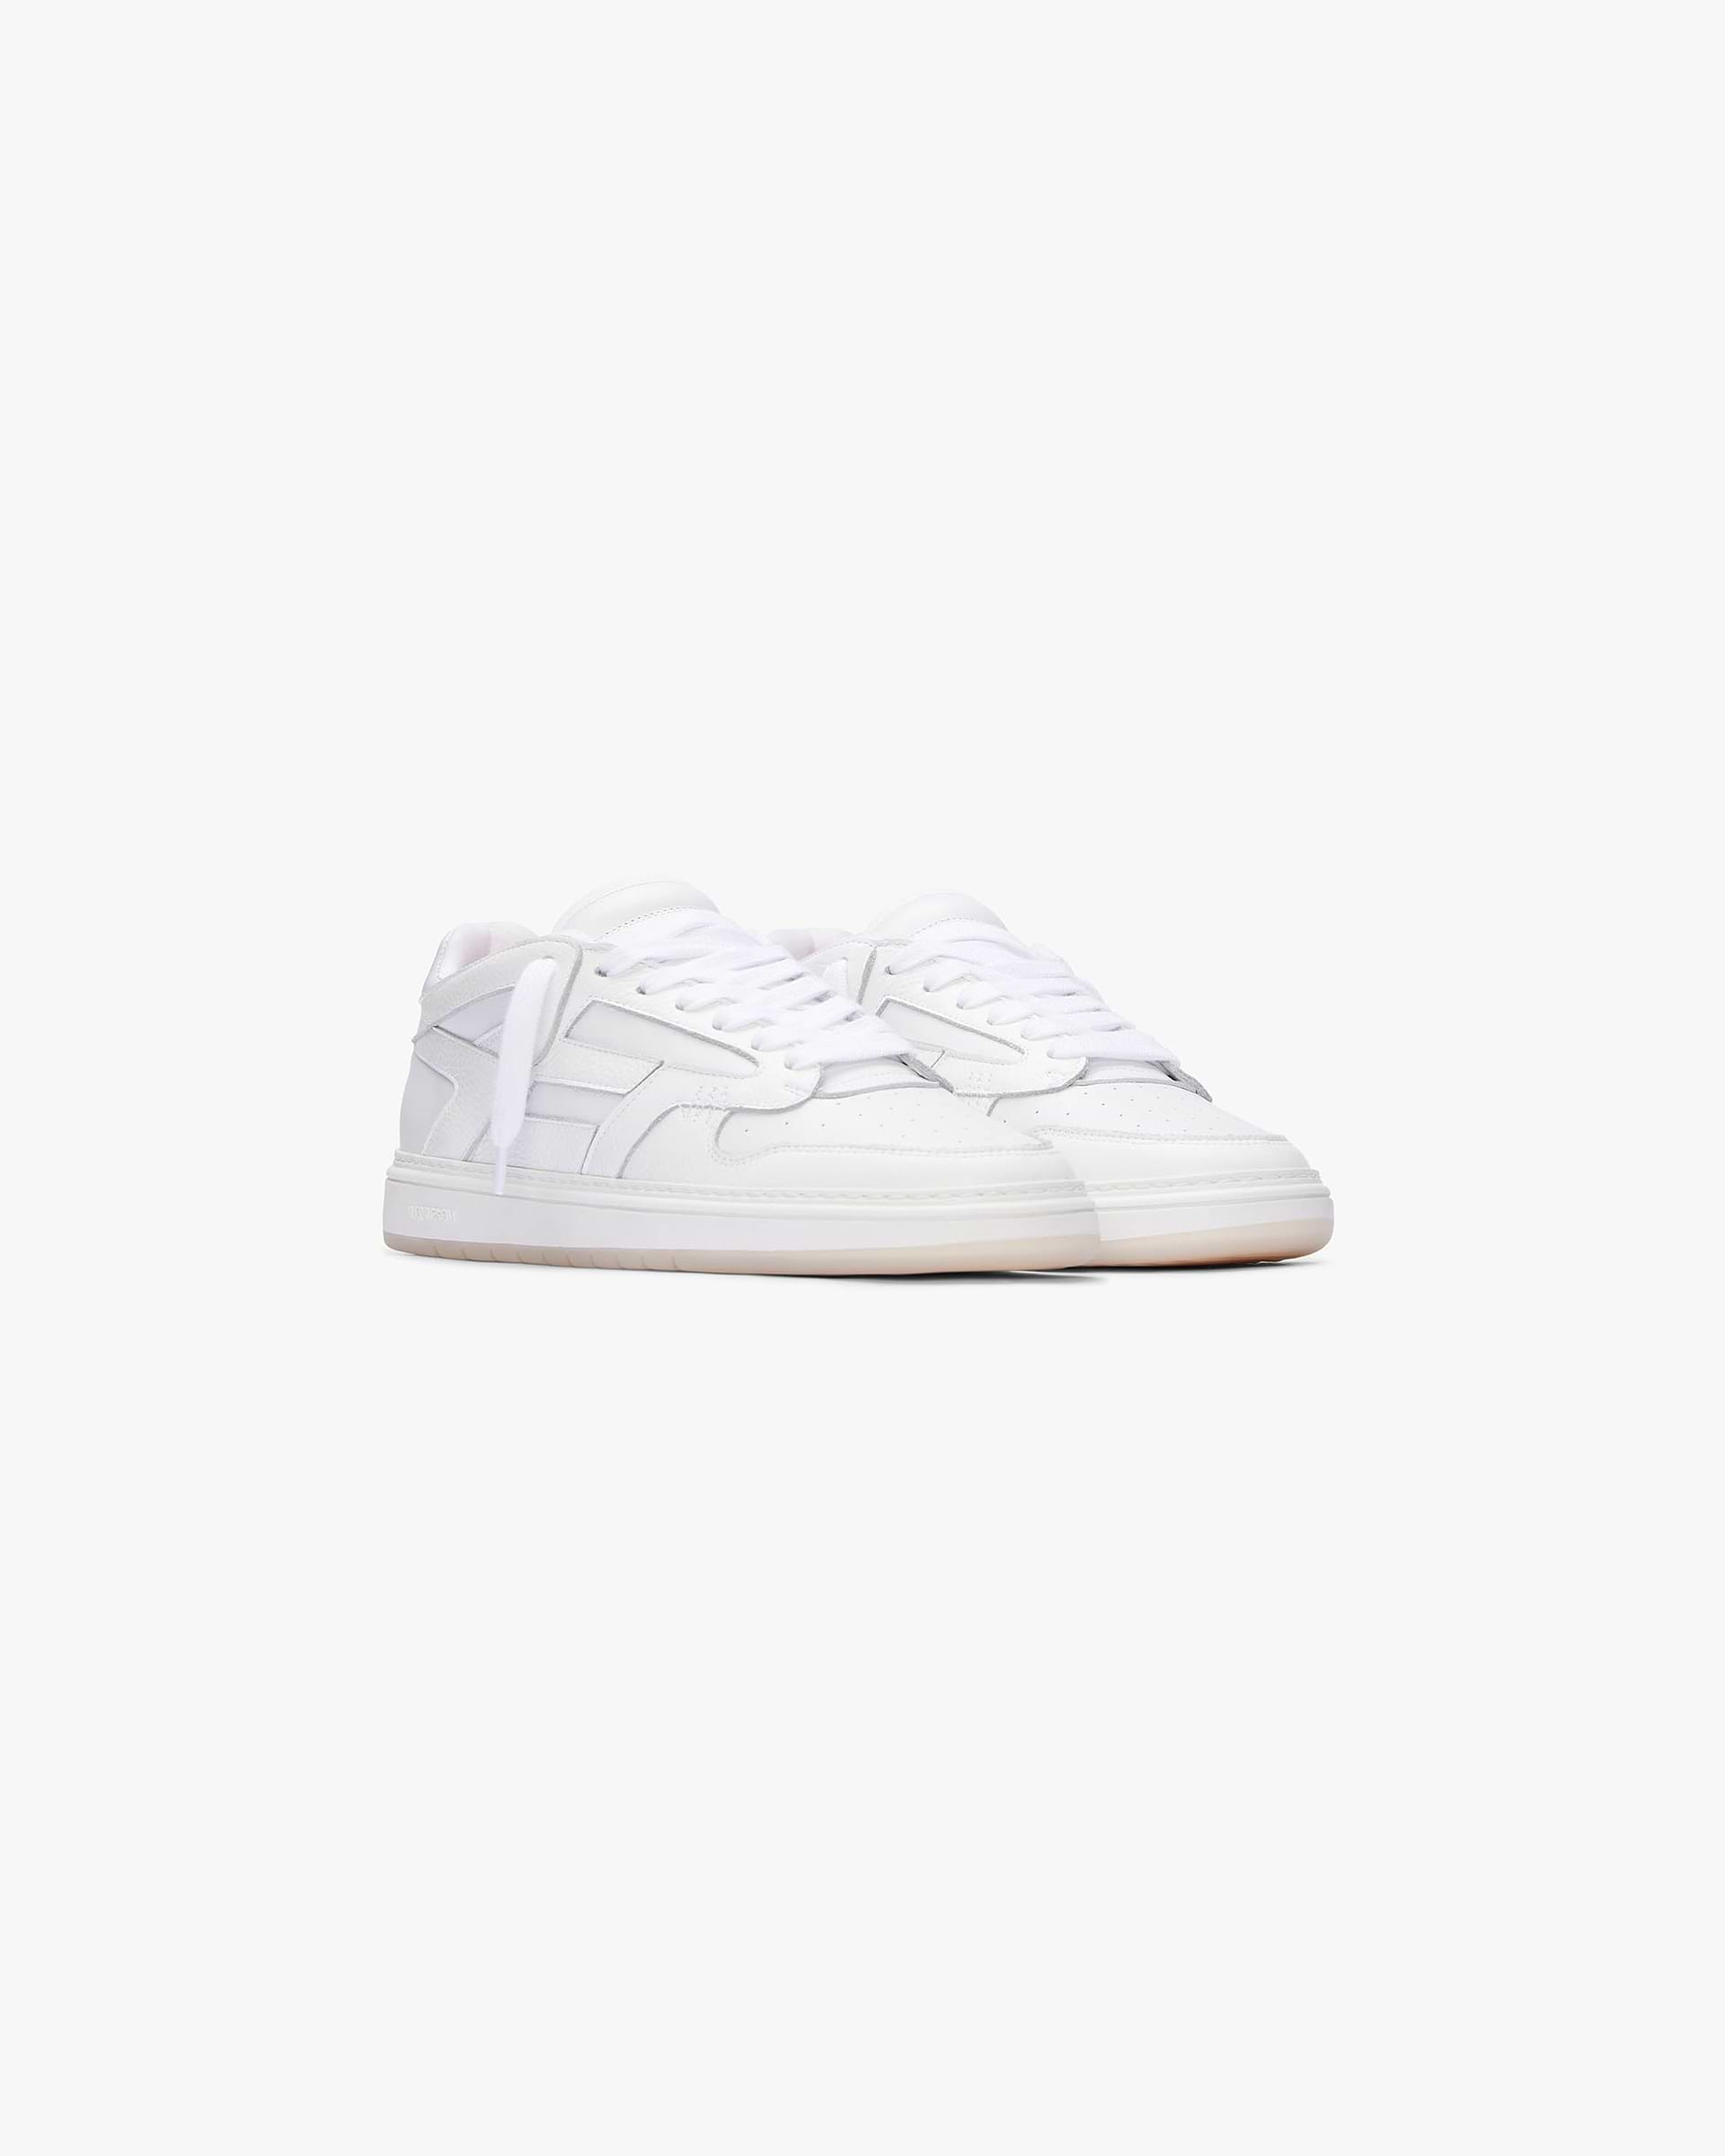 Reptor Low | Flat White Footwear SS23 | Represent Clo